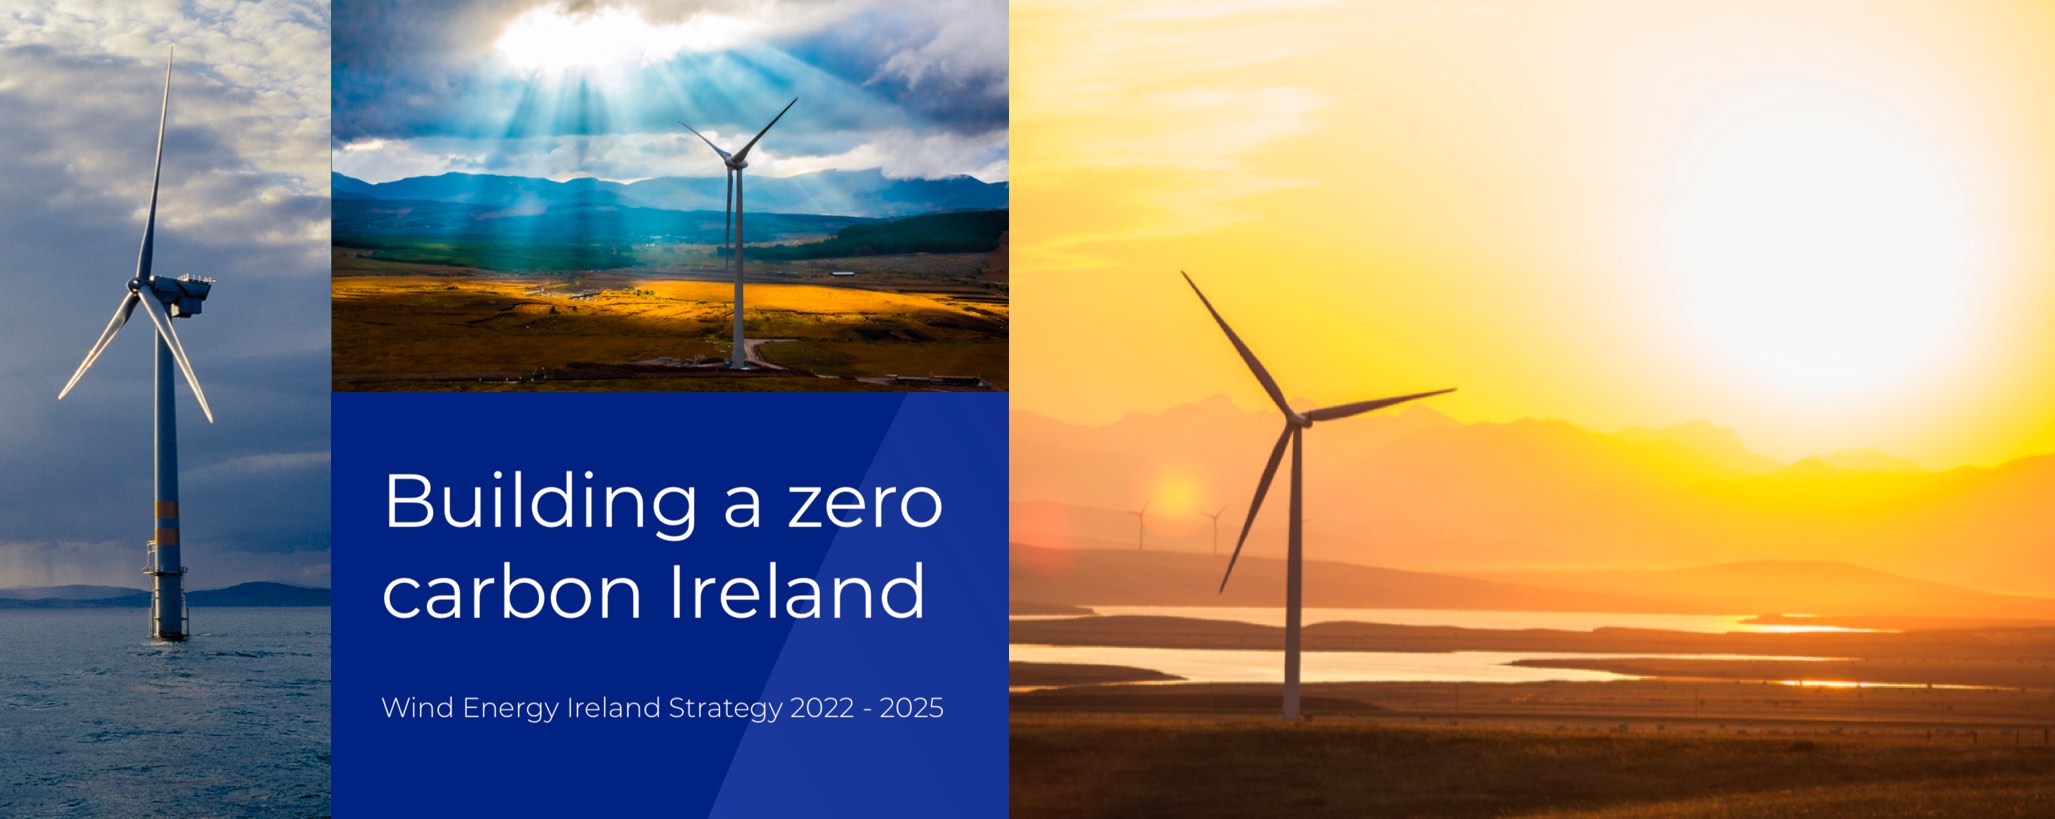 Building a zero carbon Ireland